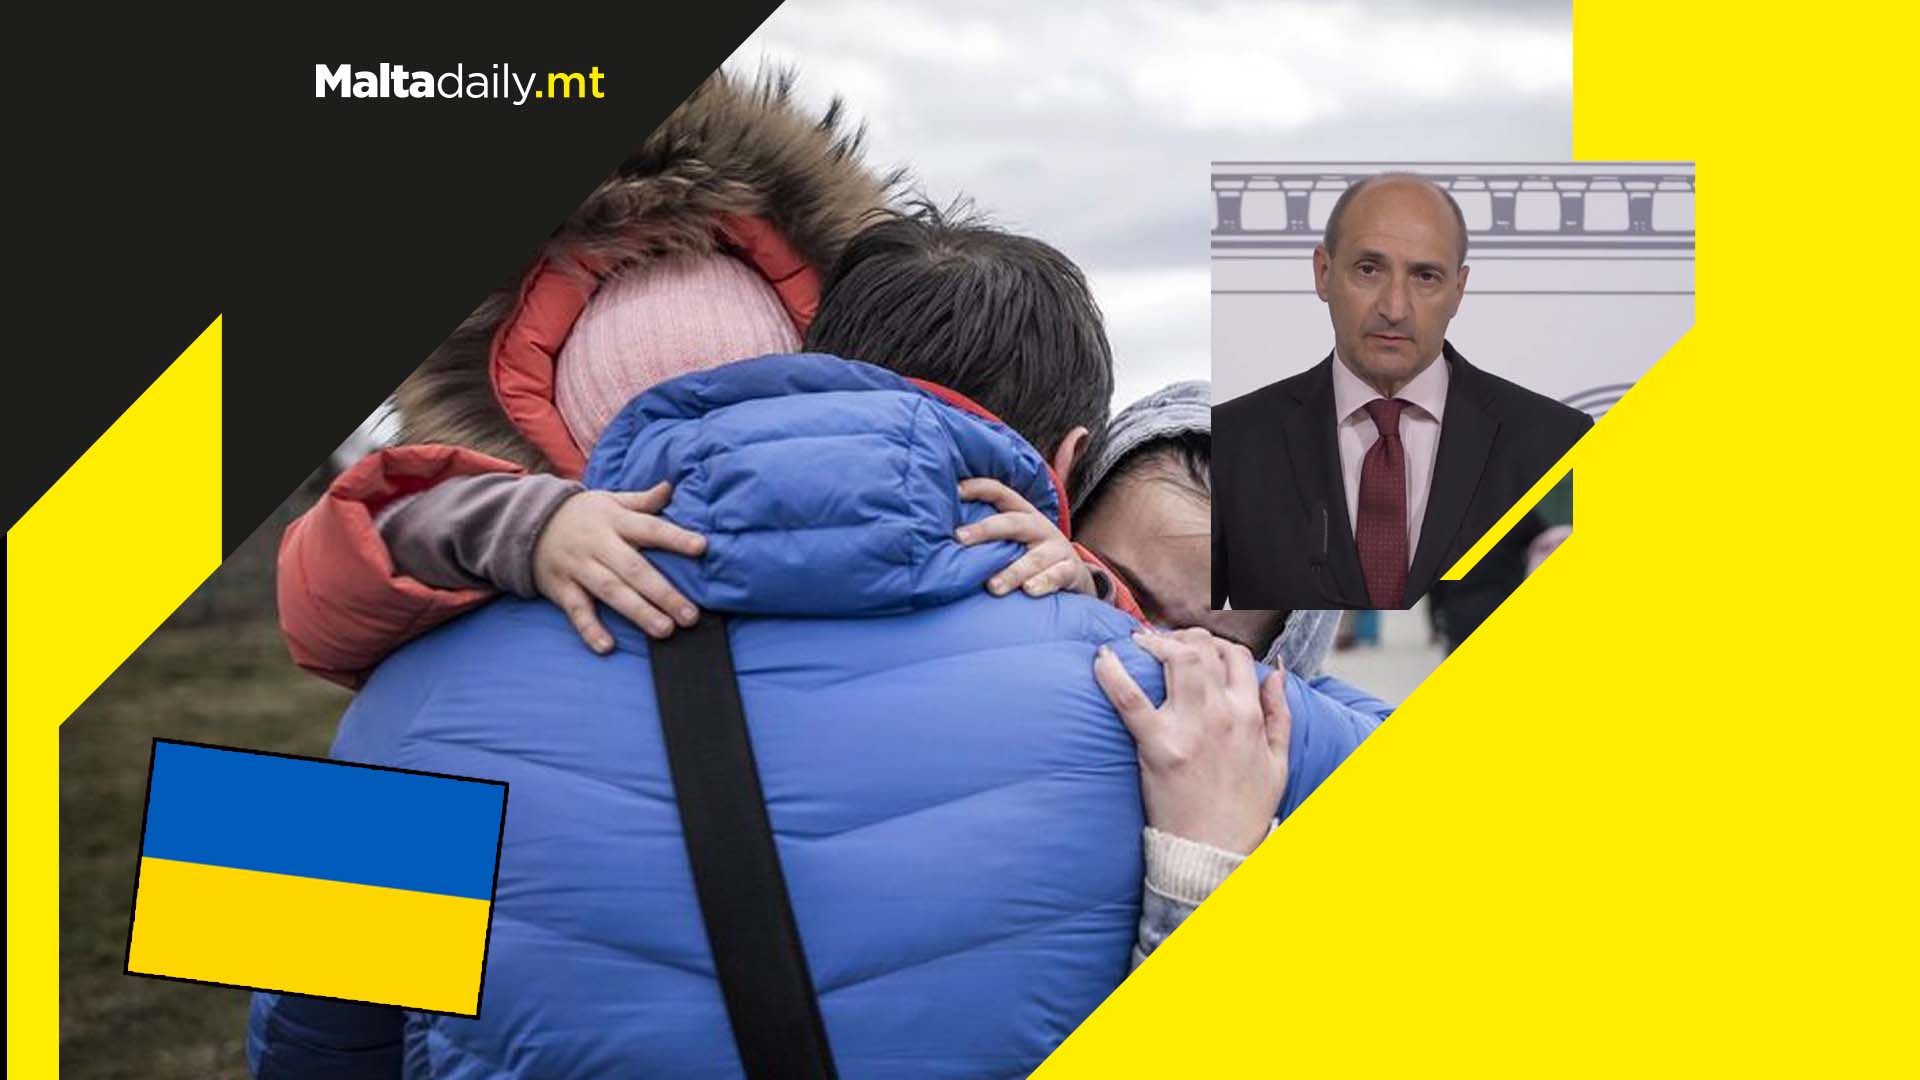 COVID regulations suspended for Ukrainian citizens seeking refuge in Malta